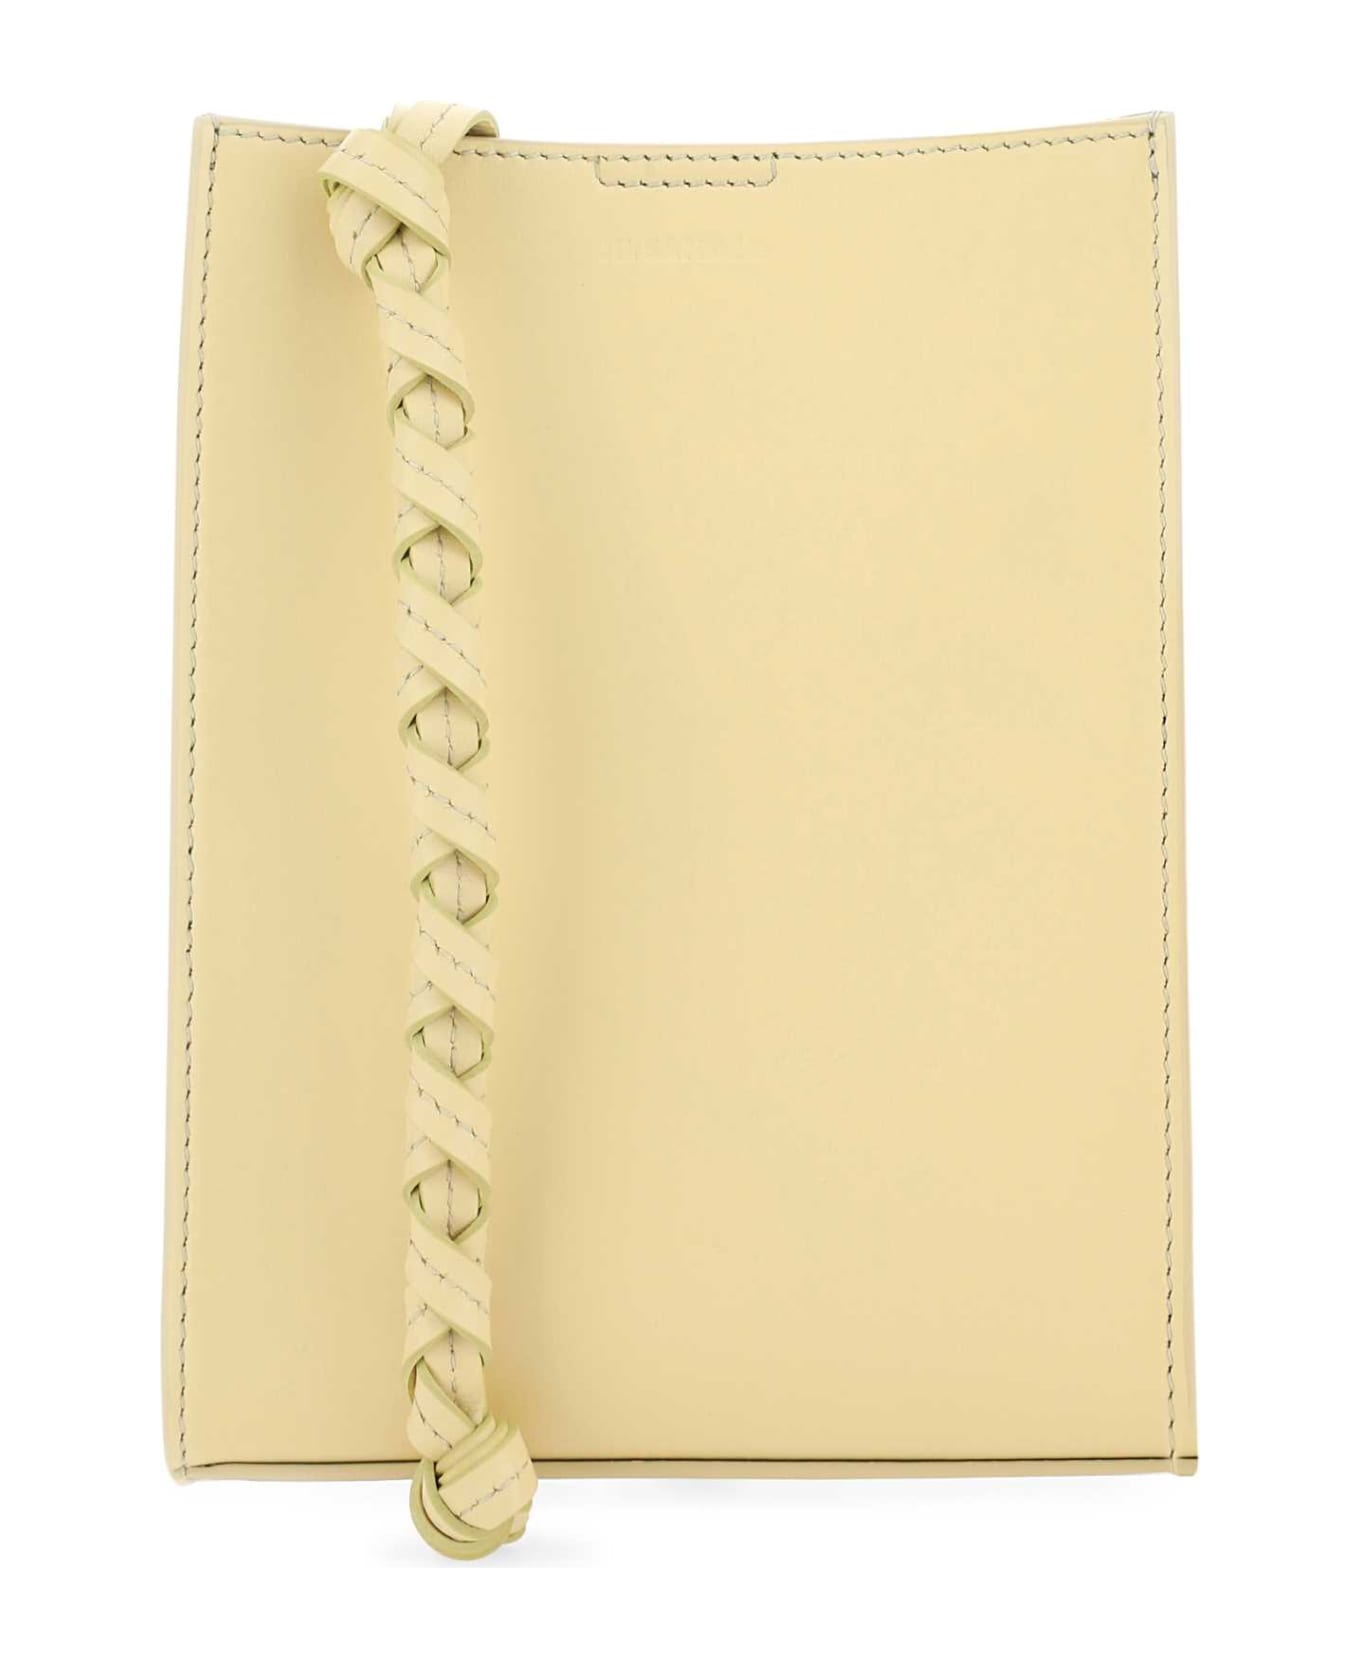 Jil Sander Pastel Yellow Leather Small Tangle Shoulder Bag - 723 ショルダーバッグ